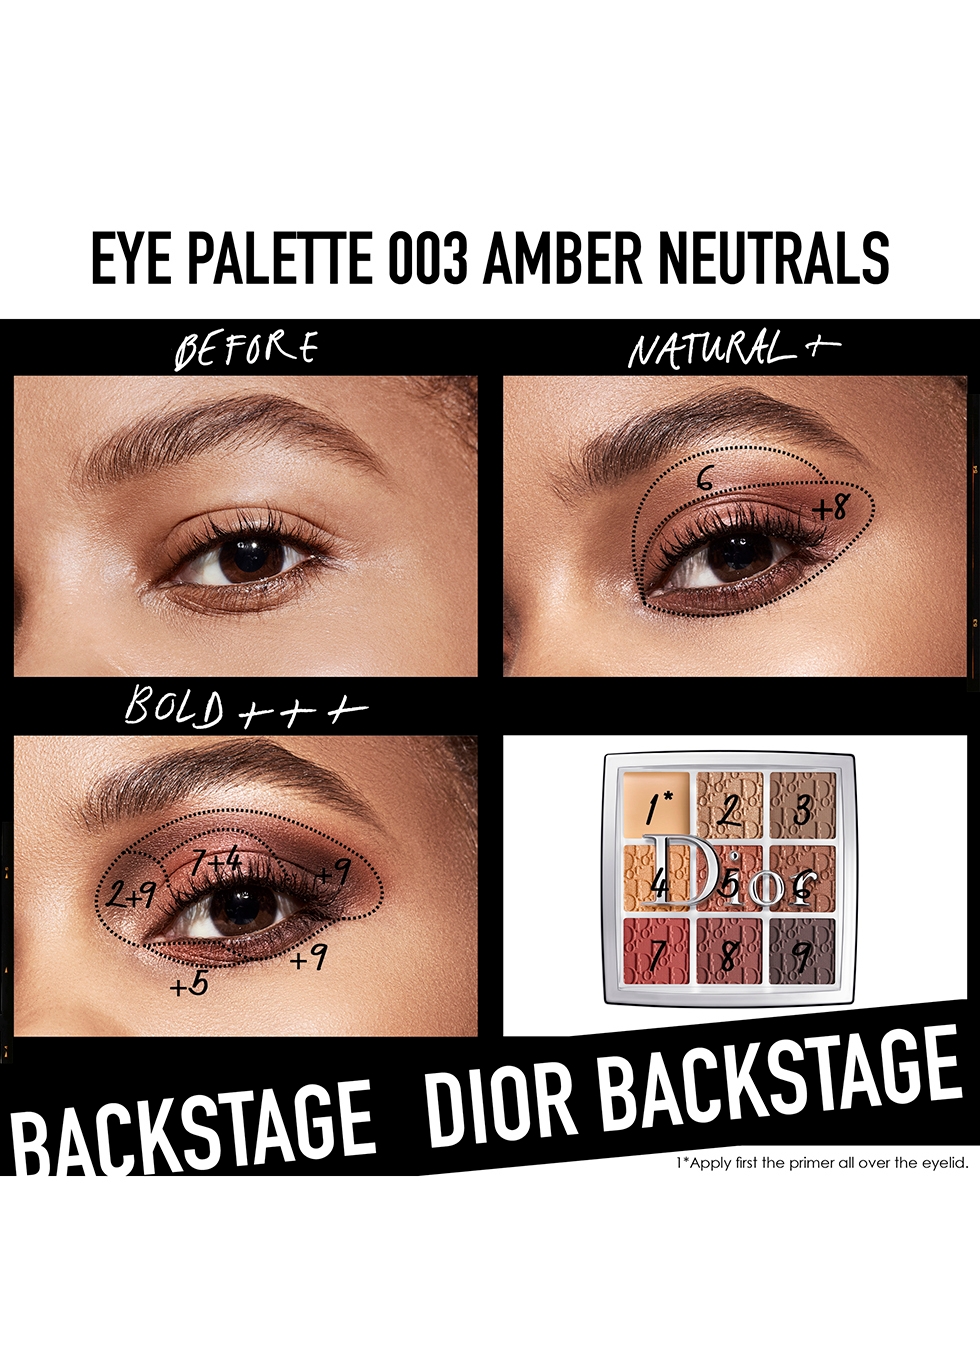 Dior Backstage Eye Palette in Amber Neutrals  Weeks of Beauty